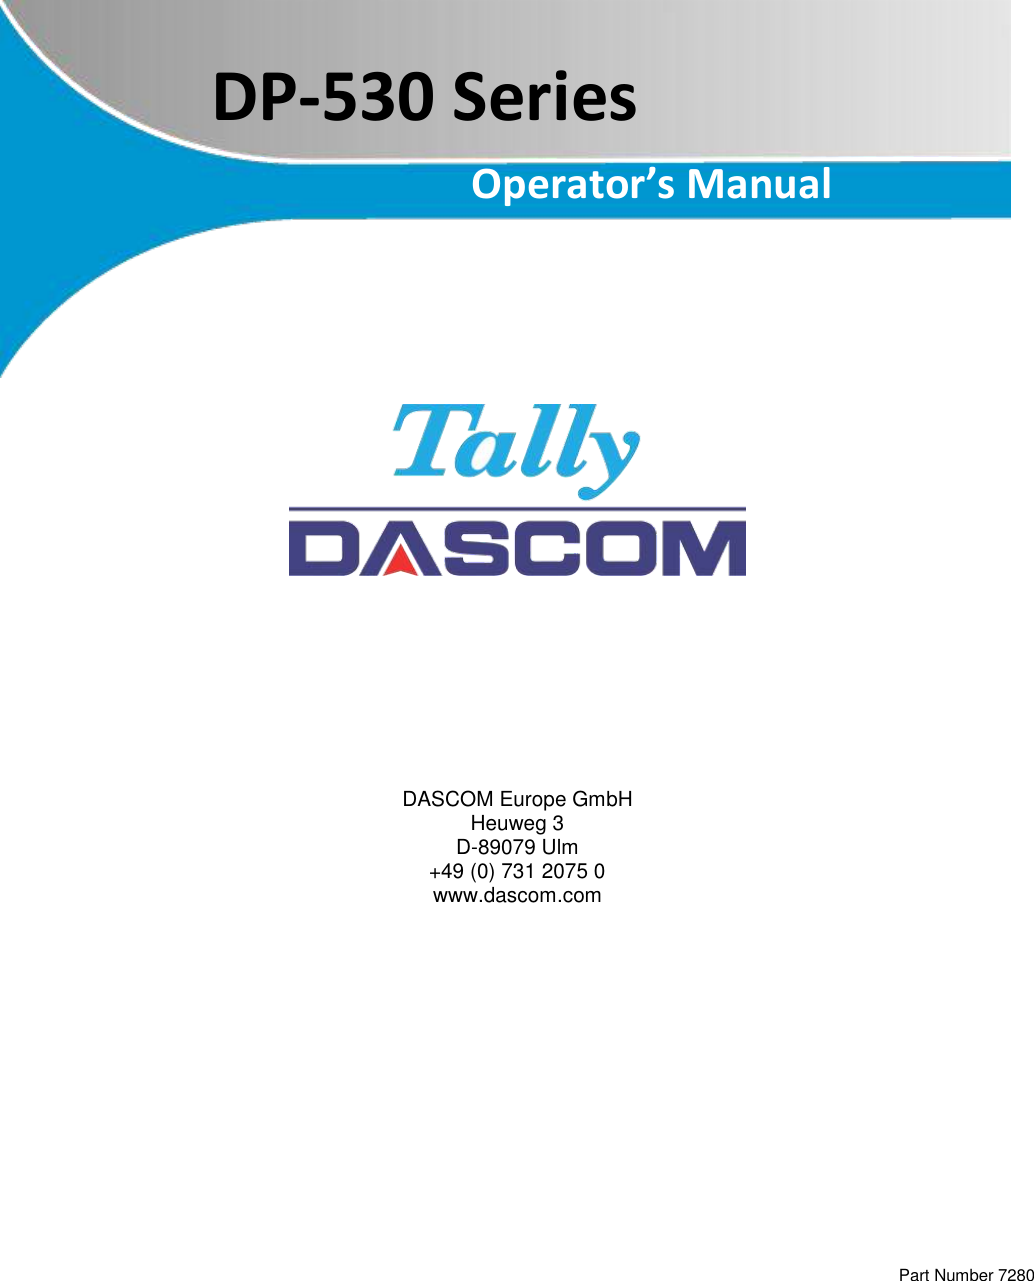            DASCOM Europe GmbH Heuweg 3 D-89079 Ulm +49 (0) 731 2075 0 www.dascom.com                          Part Number 7280 DP-530 Series Operator’s Manual 